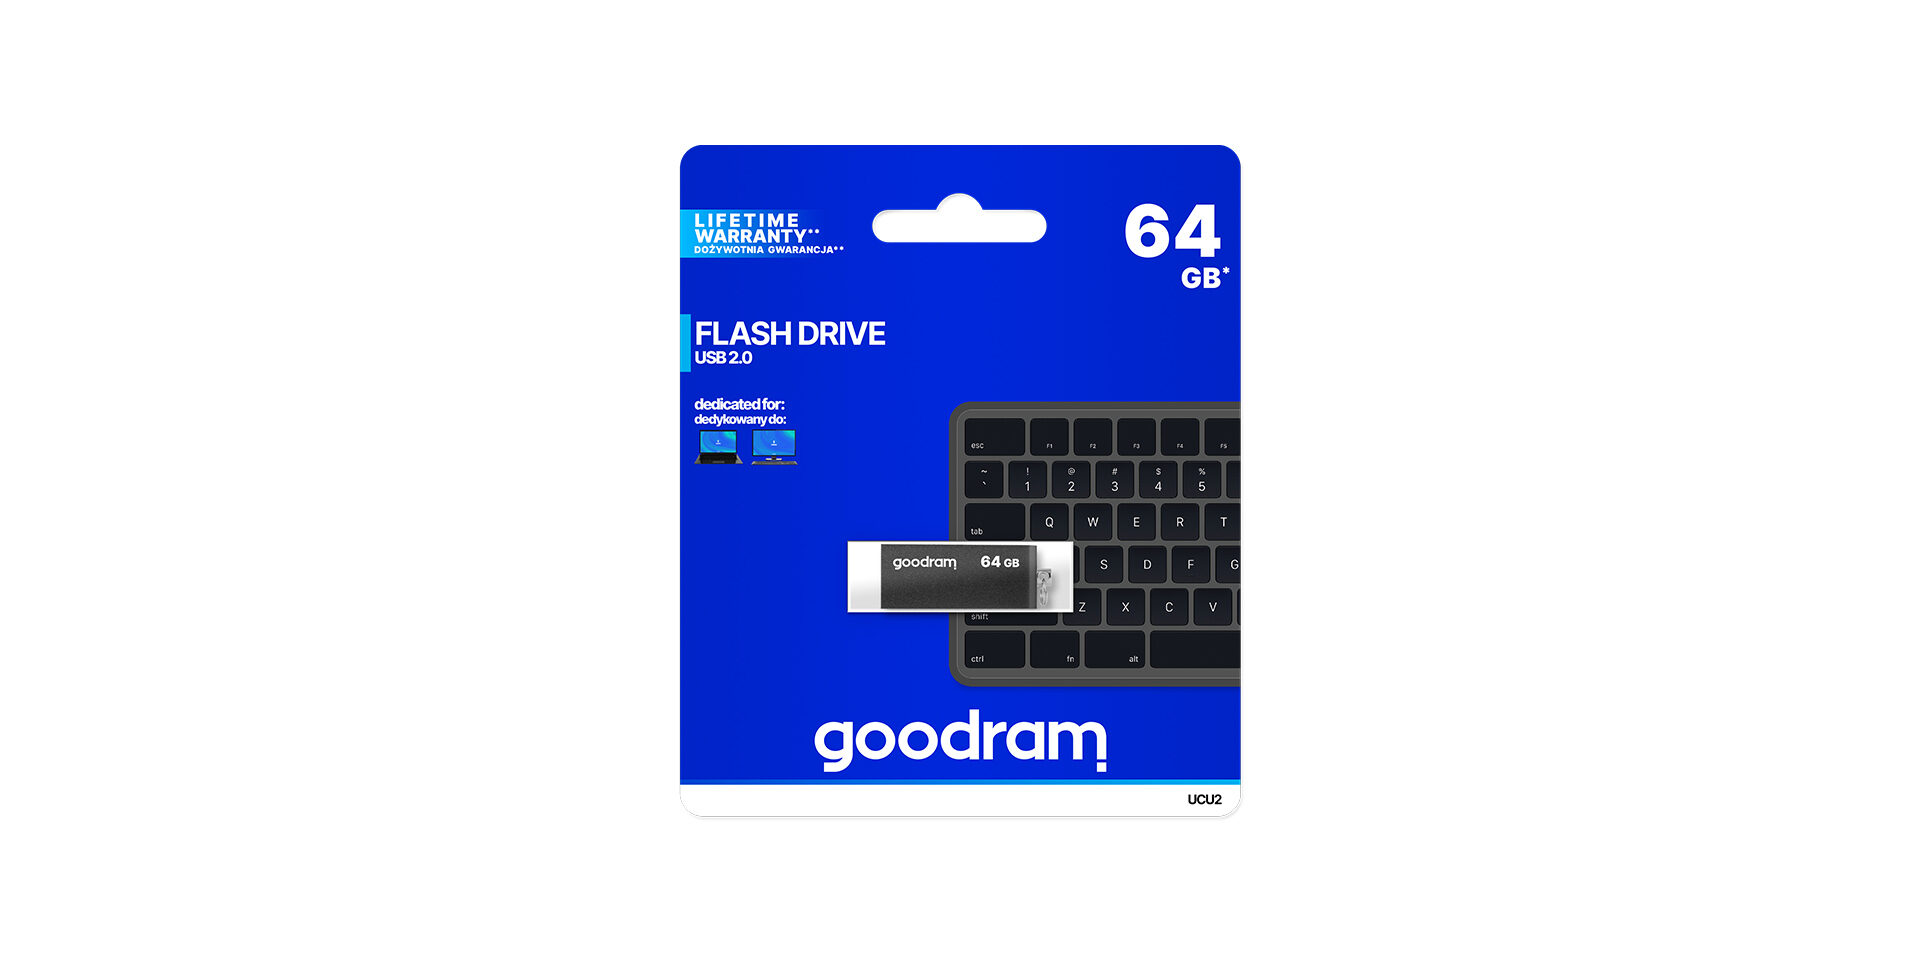 USB UCU2 marki Goodram w opakowaniu